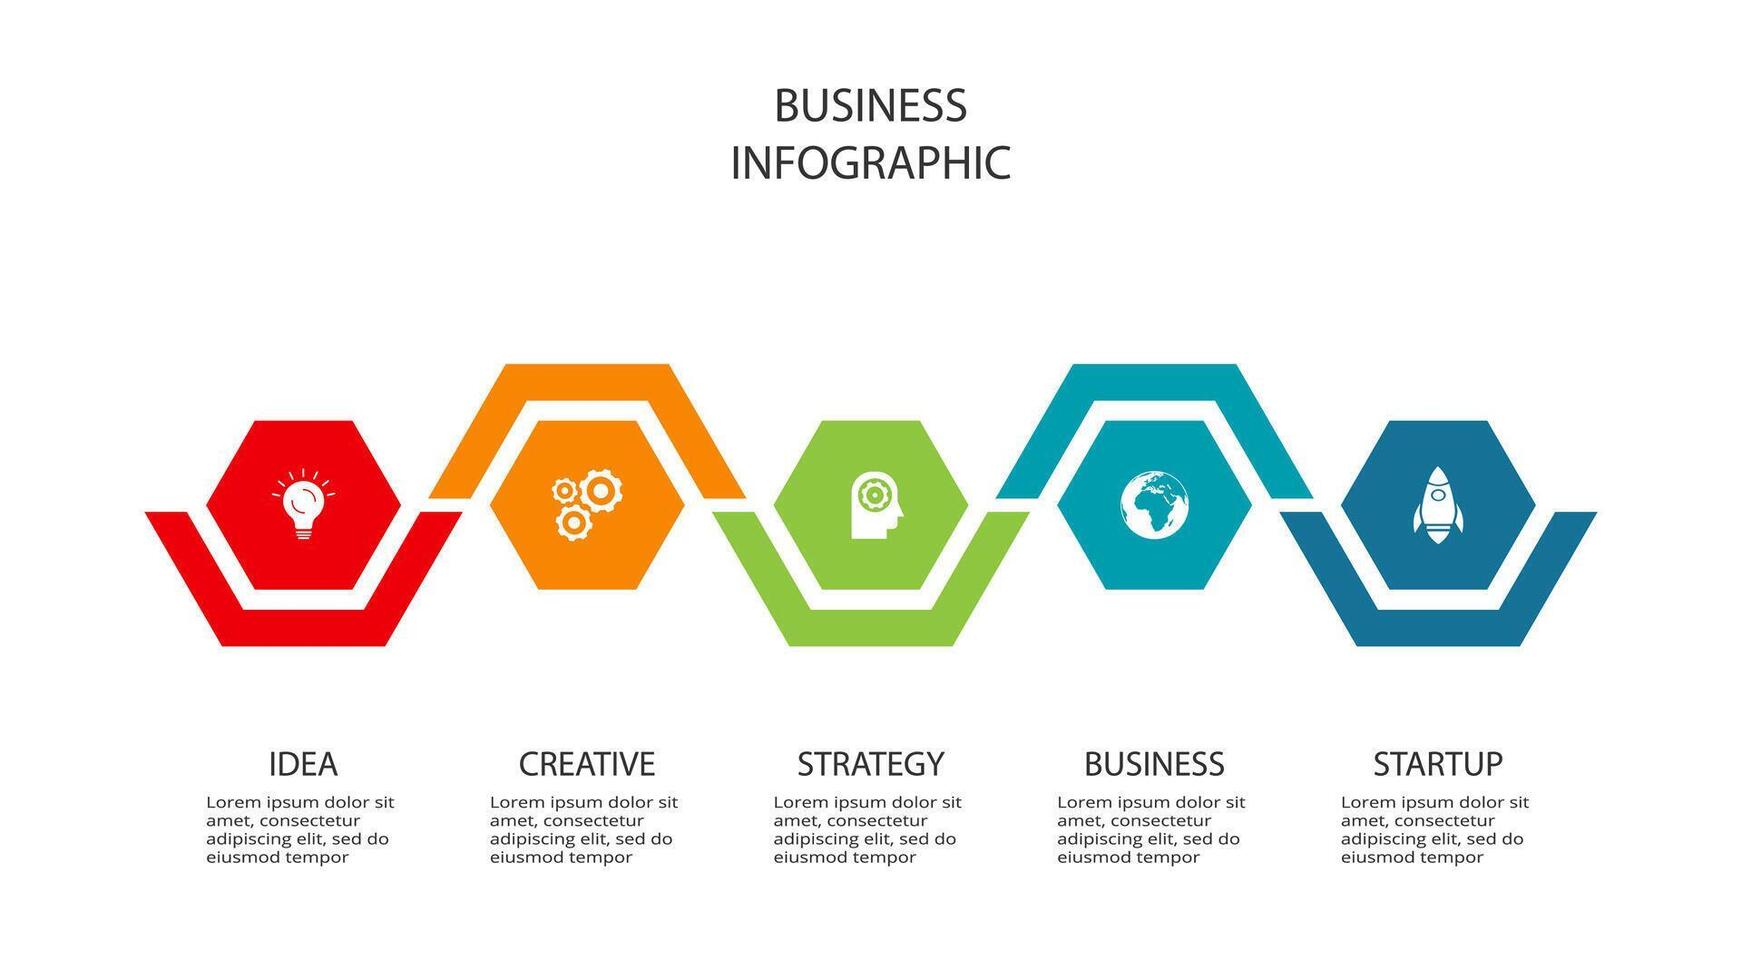 creativo concepto para infografía con 5 5 pasos, opciones, partes o procesos. negocio datos visualización. vector